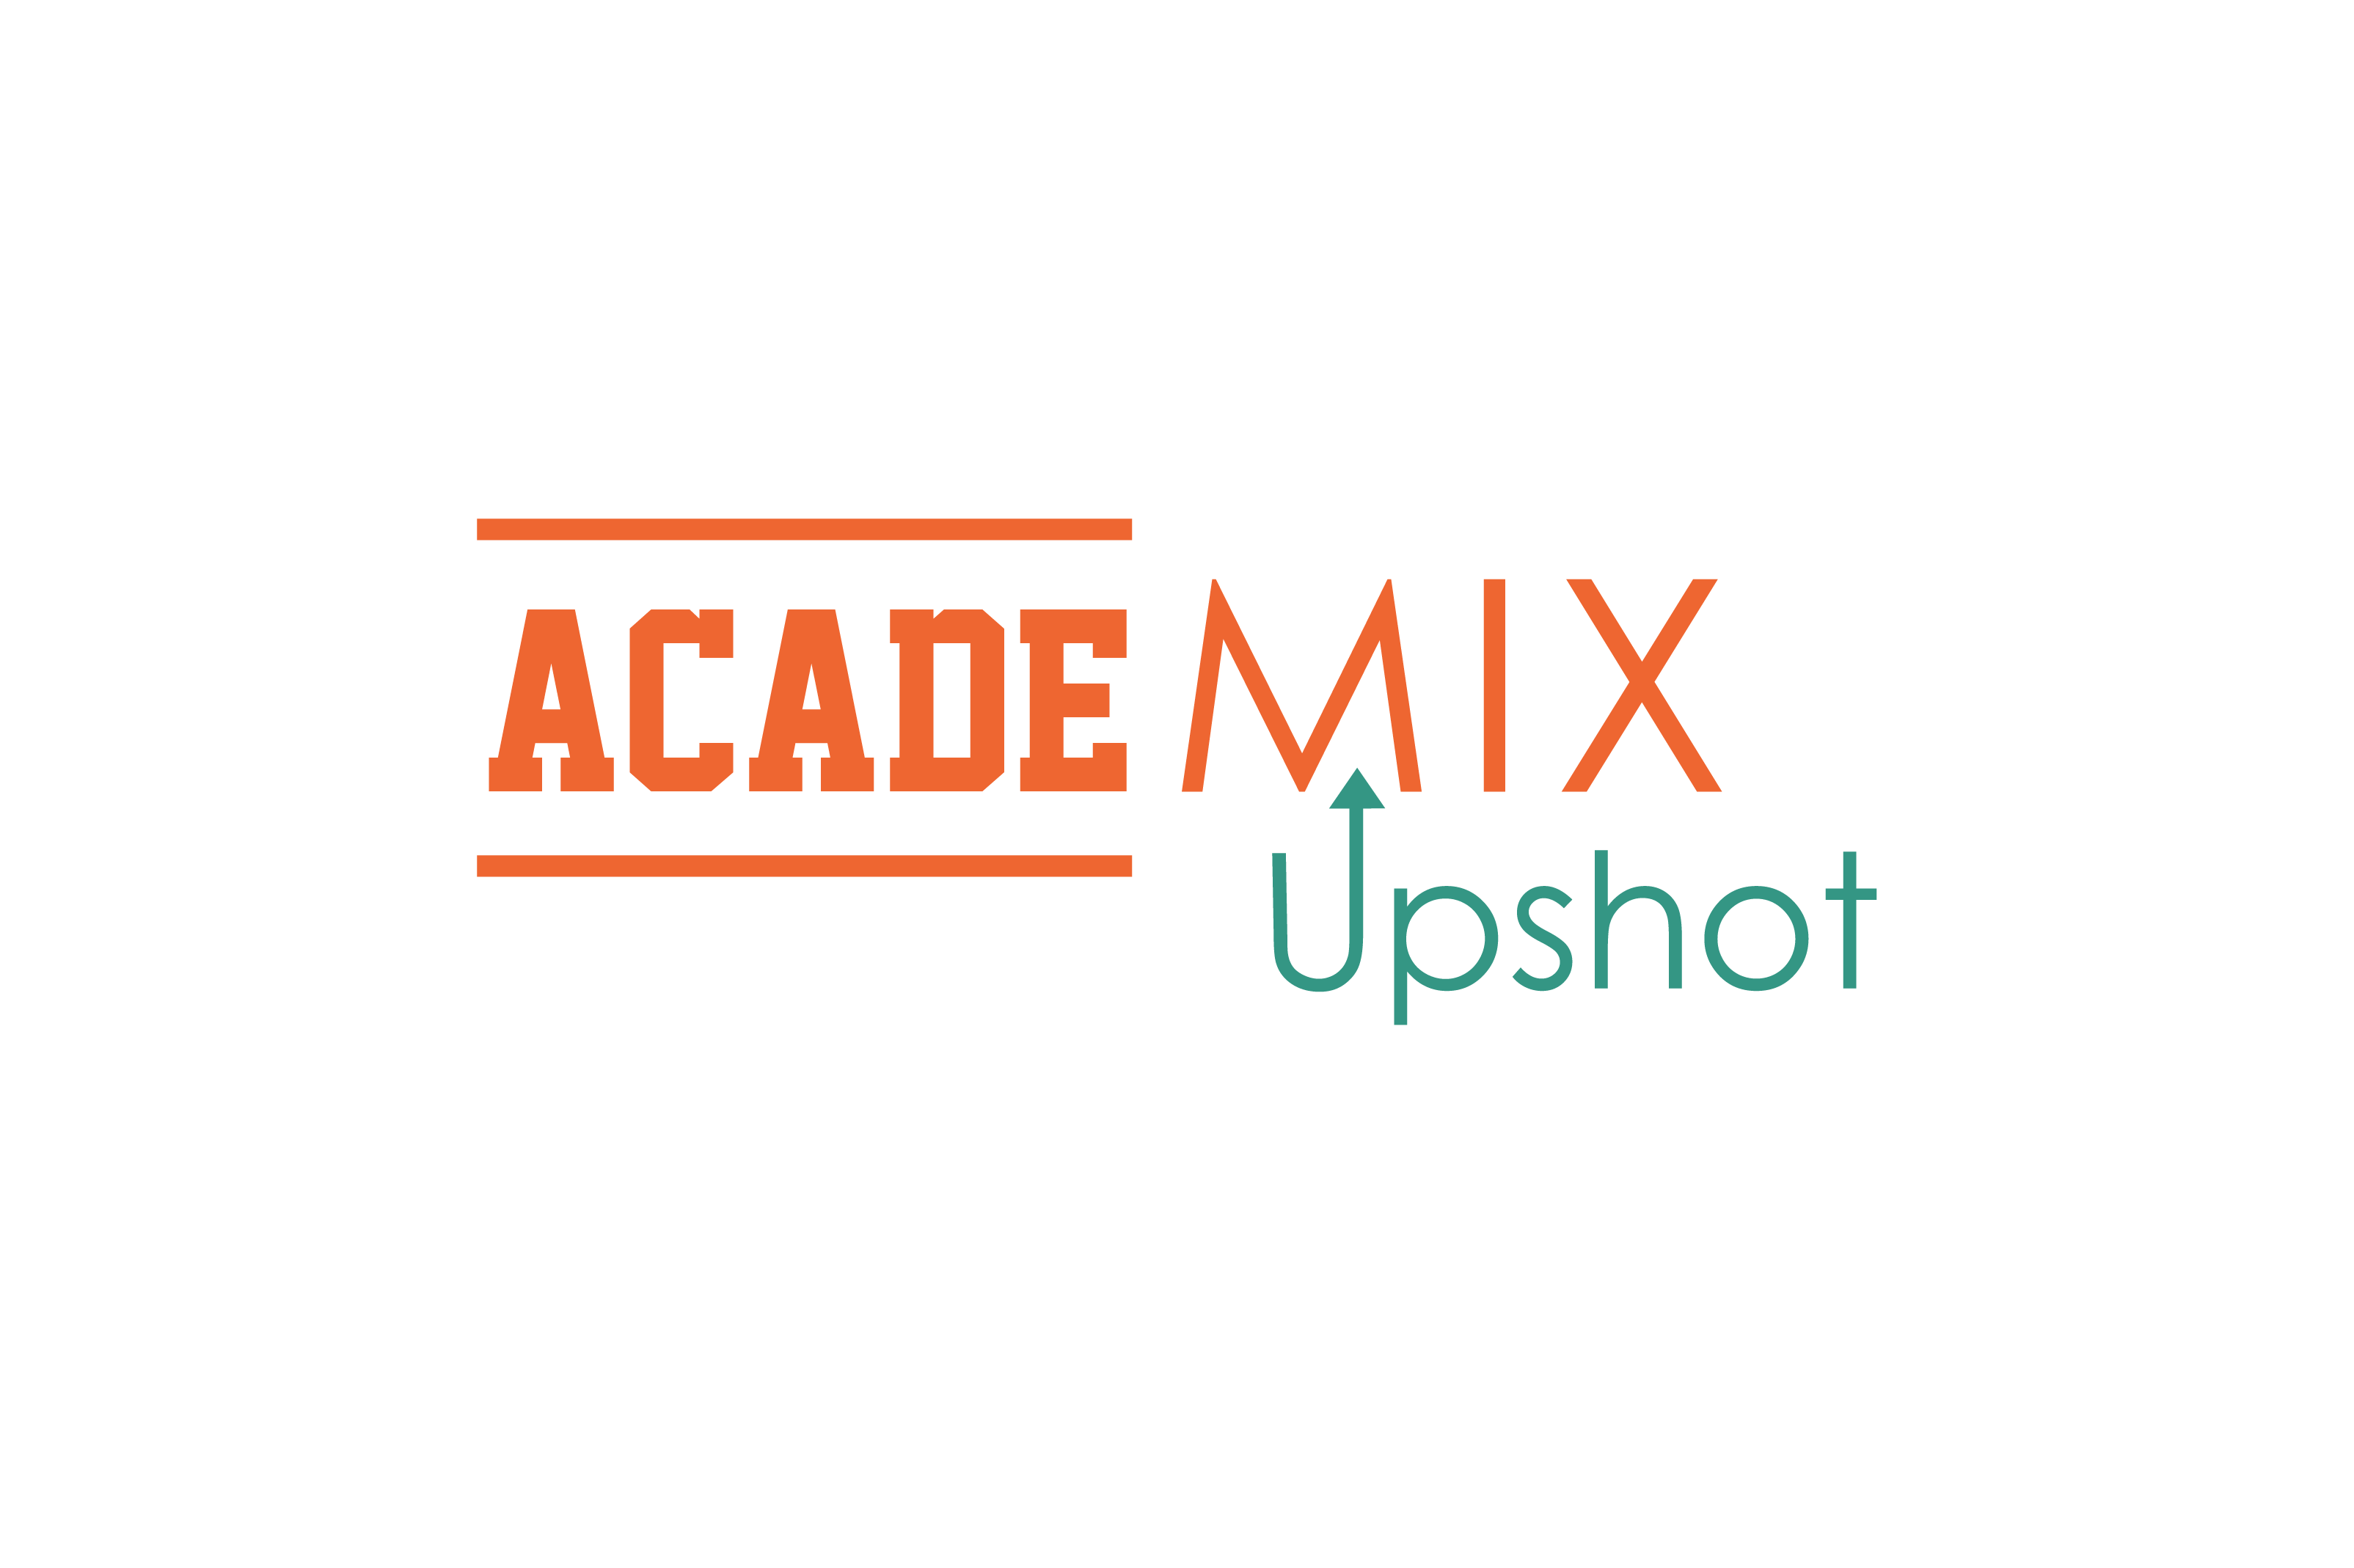 ACADEMIX Upshot Logo 2 1